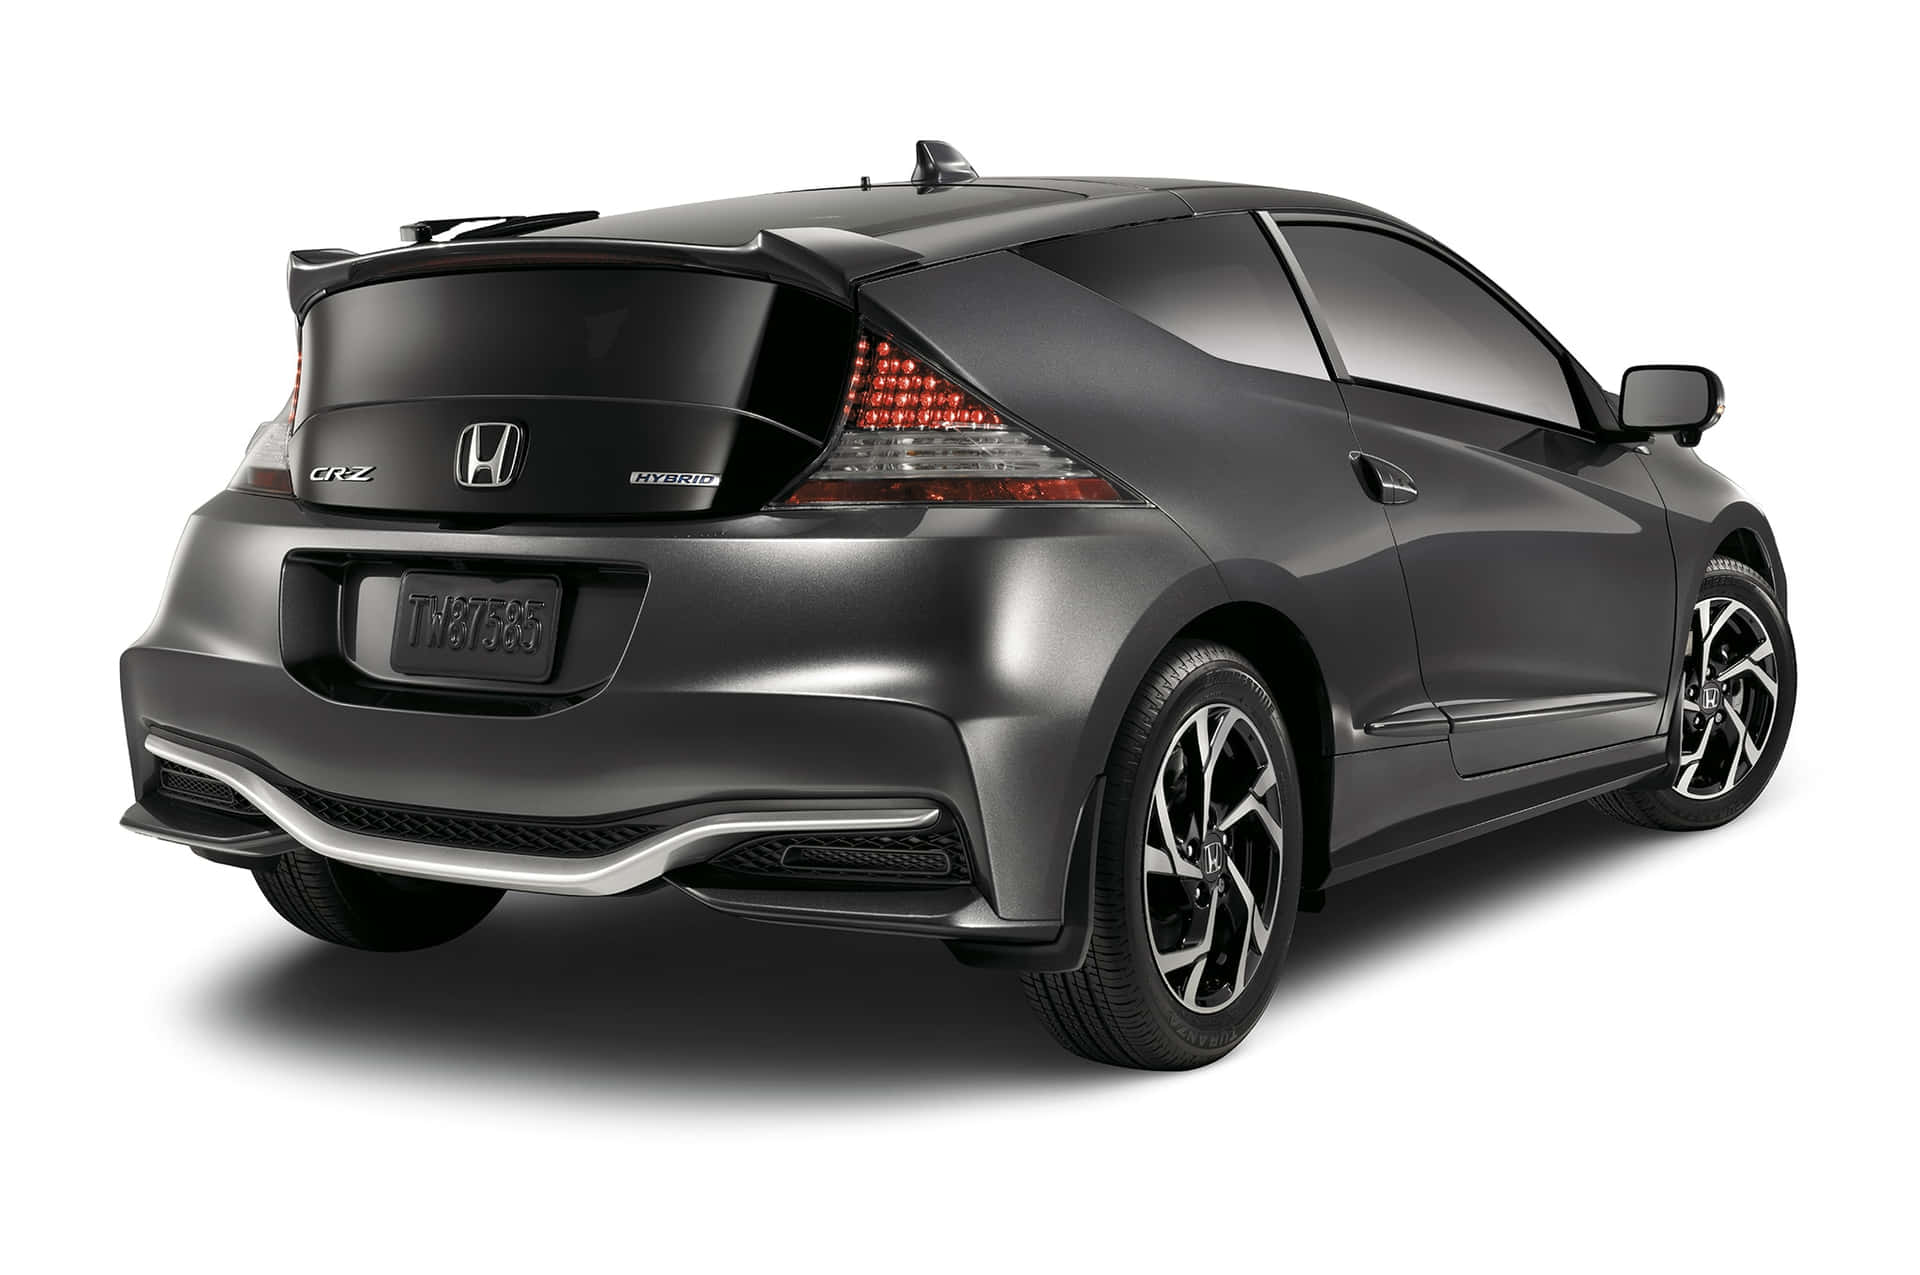 Sleek Honda CR-Z Performance Hybrid Sports Car Wallpaper